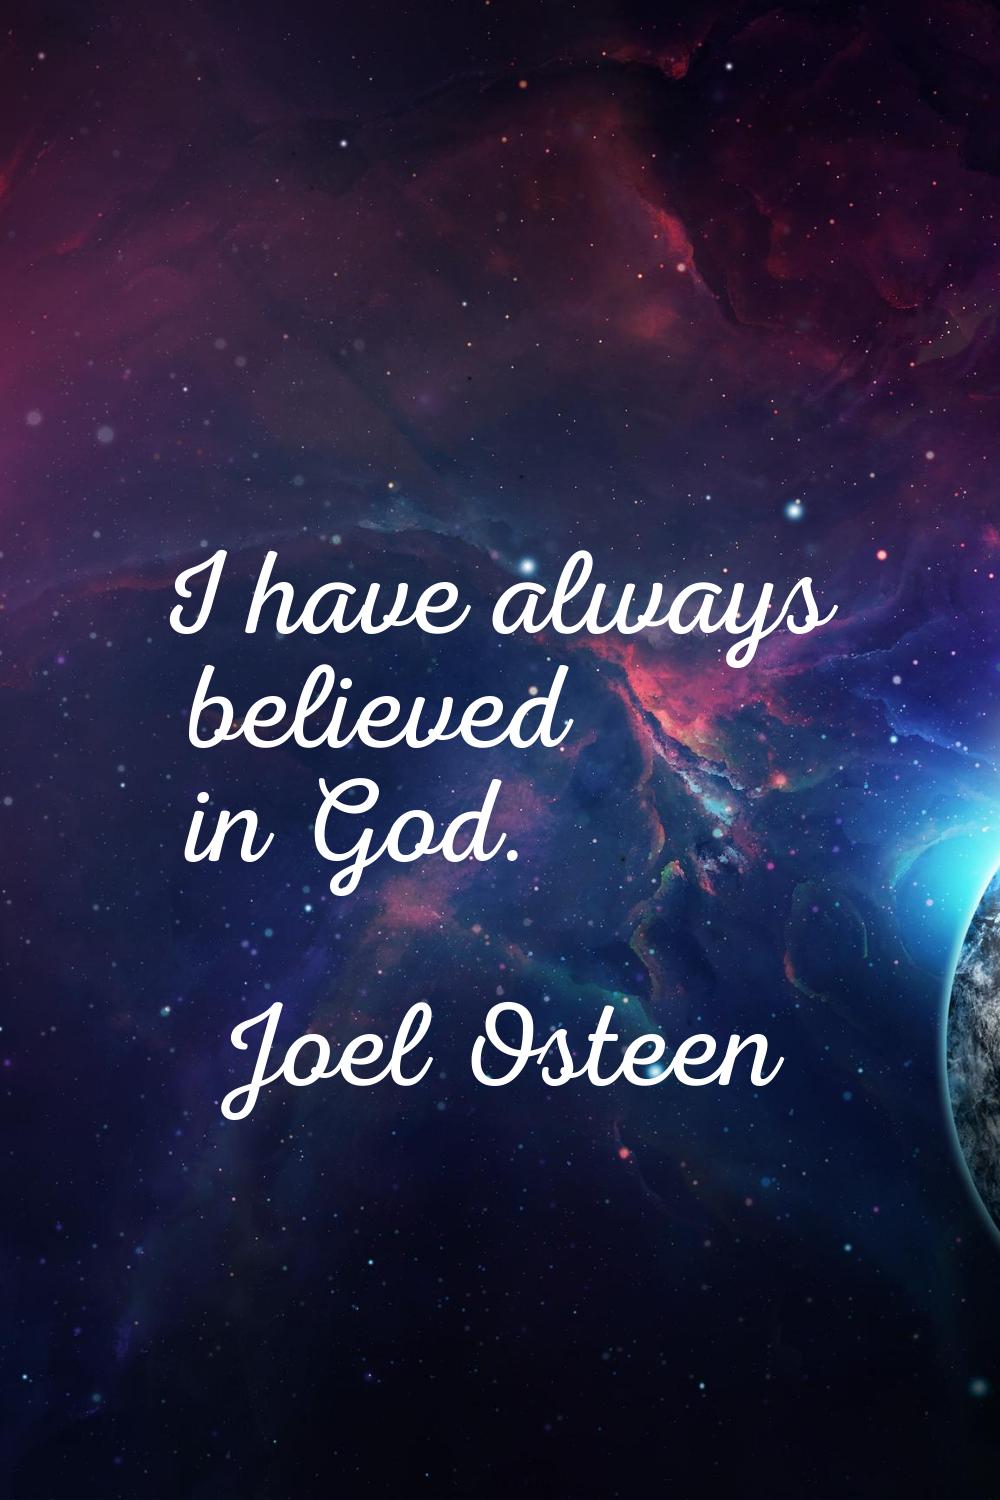 I have always believed in God.